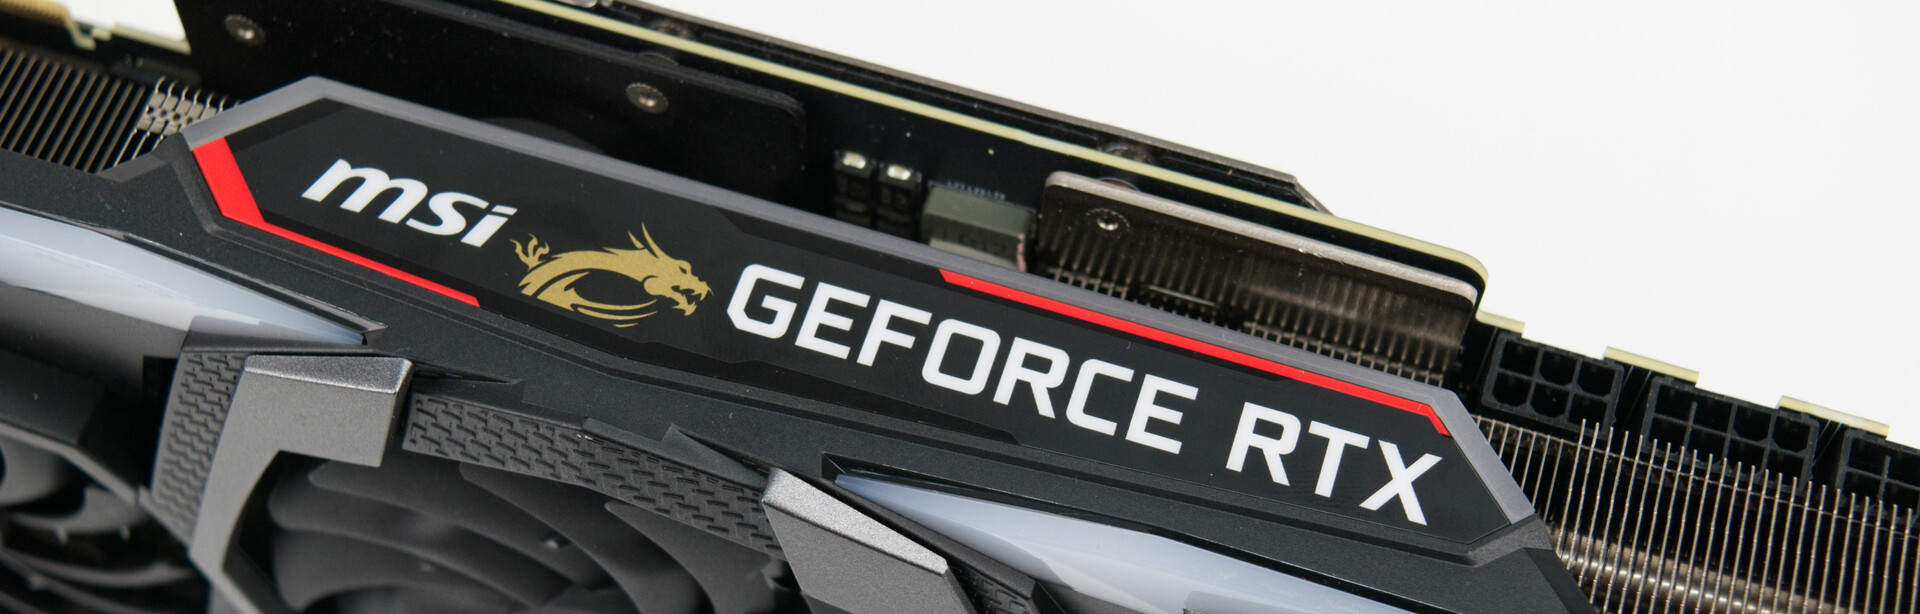 MSI GeForce 2080 Ti Gaming X Trio Desktop GPU The fastest GeForce graphics card around - NotebookCheck.net Reviews